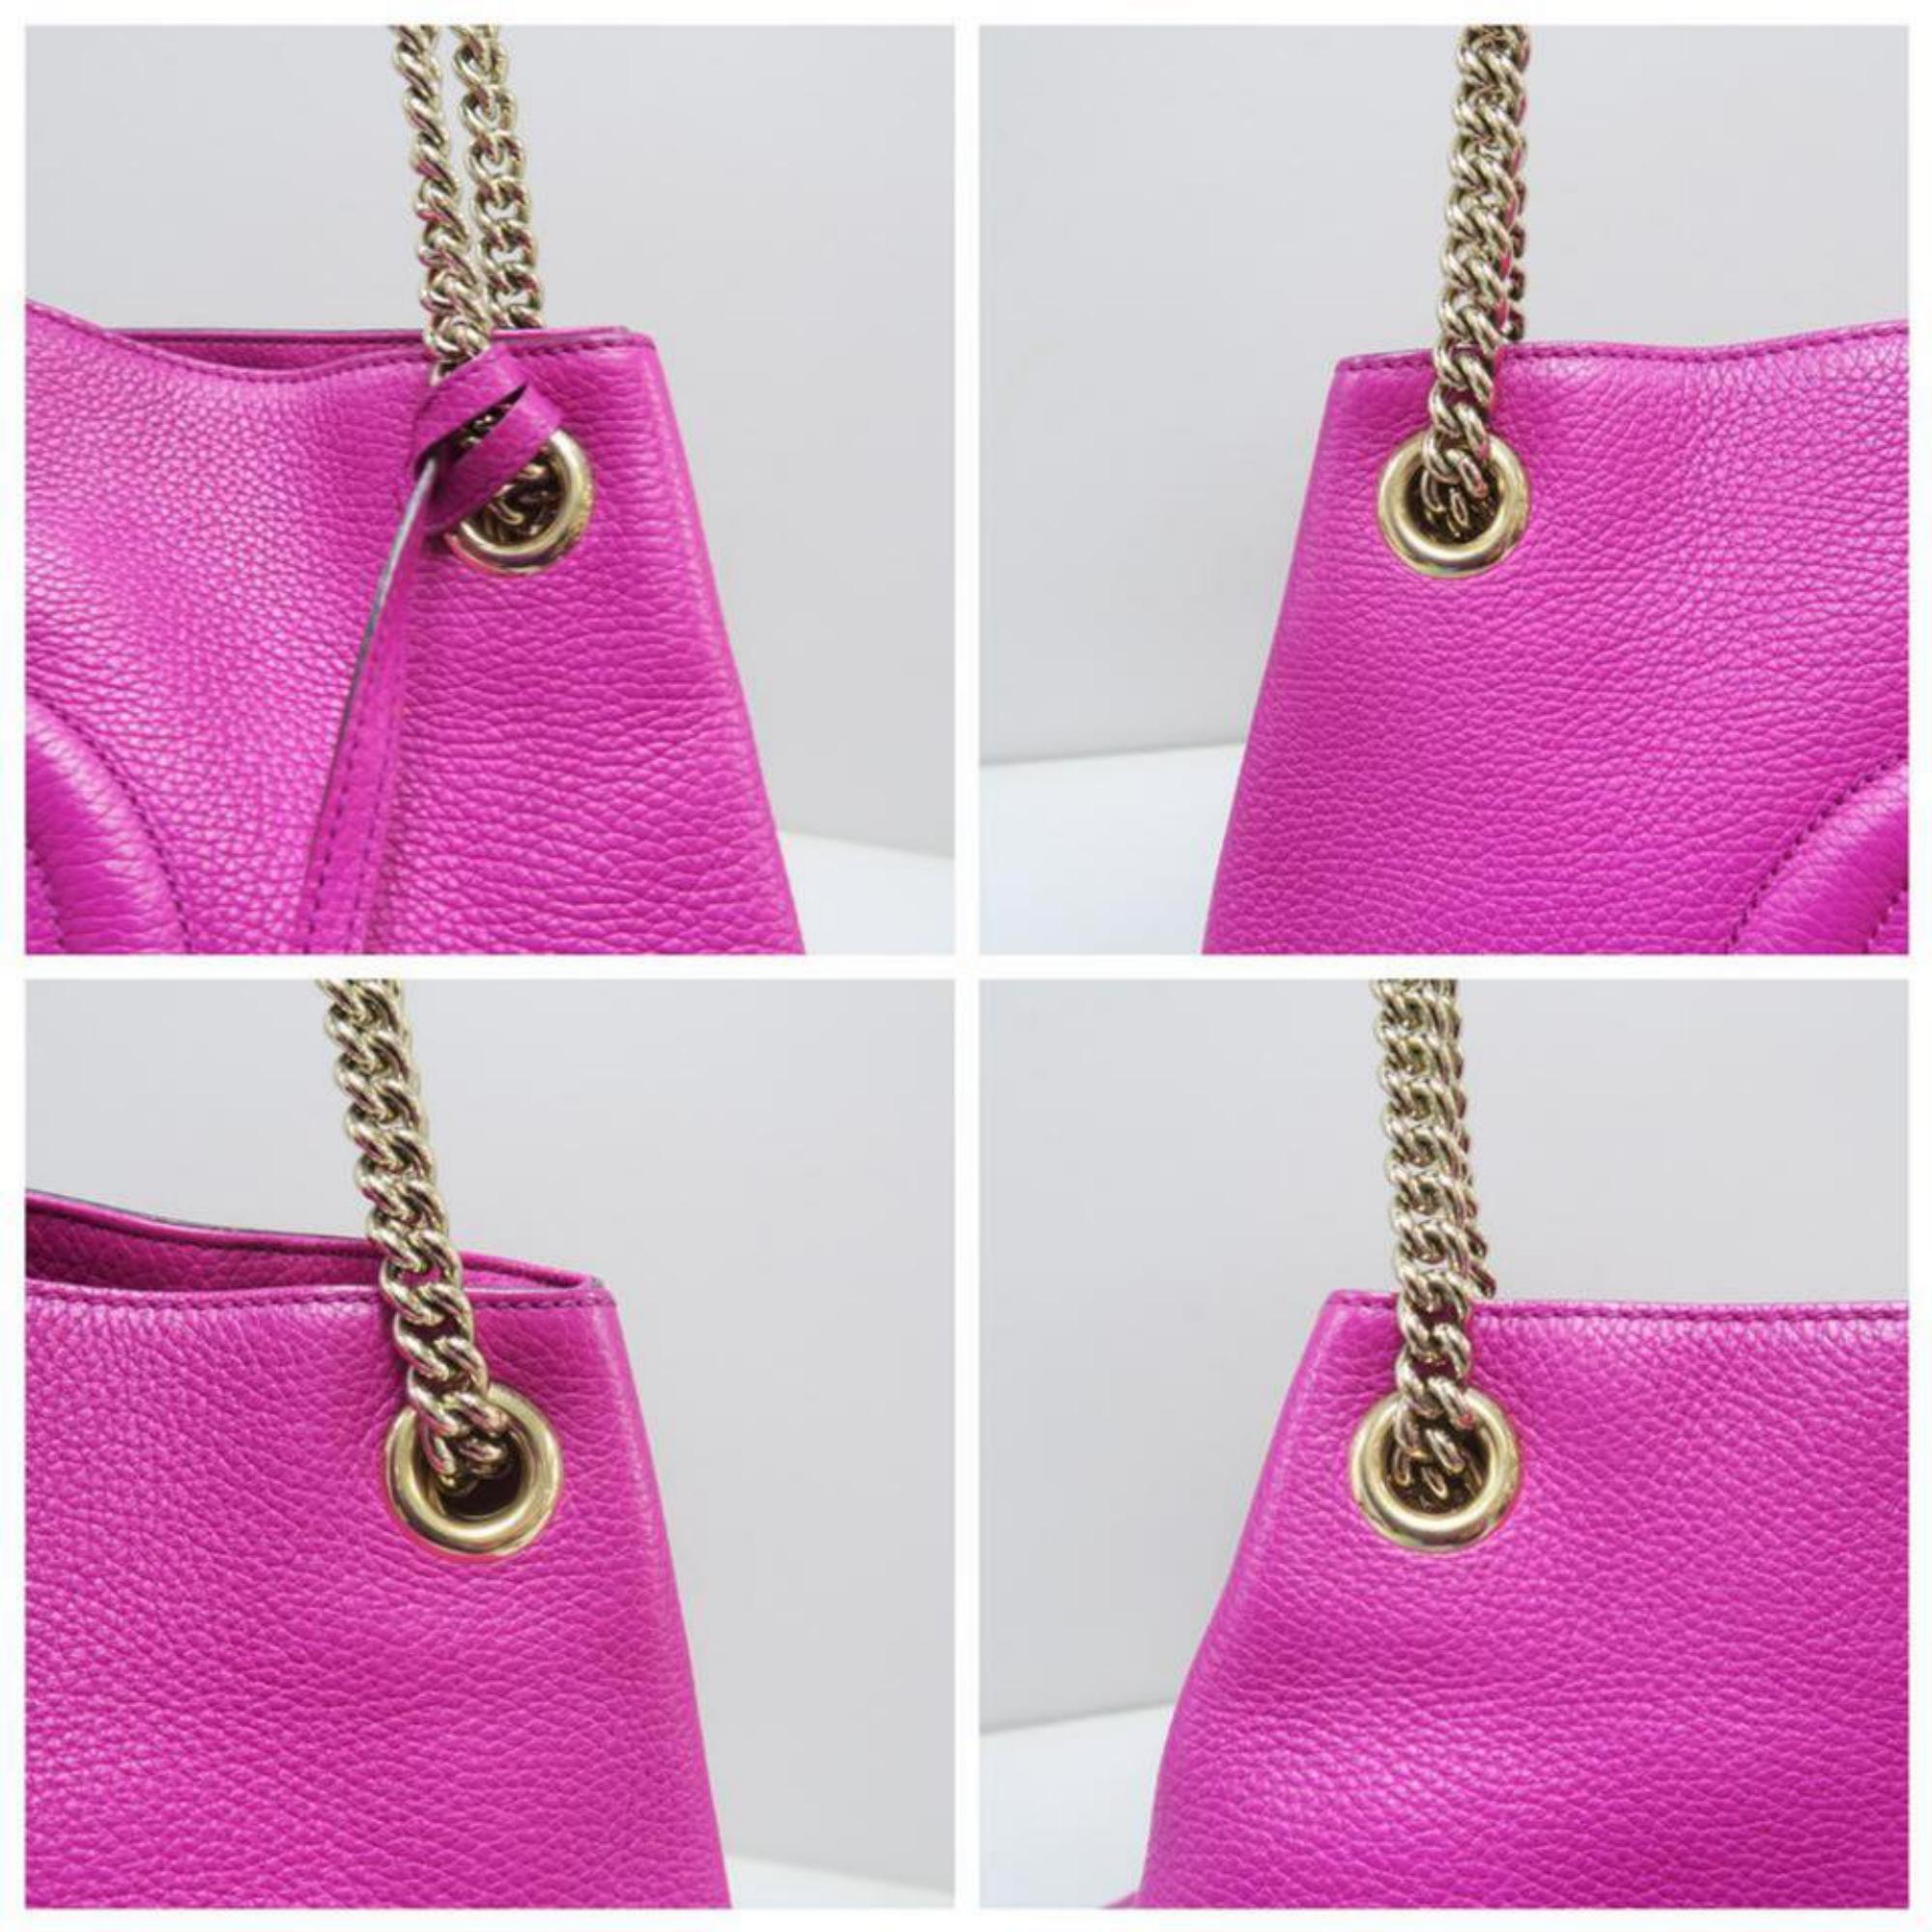 Gucci Soho Fringe Tassel Fuchsia Chain Tote 869084 Pink Leather Shoulder Bag 5